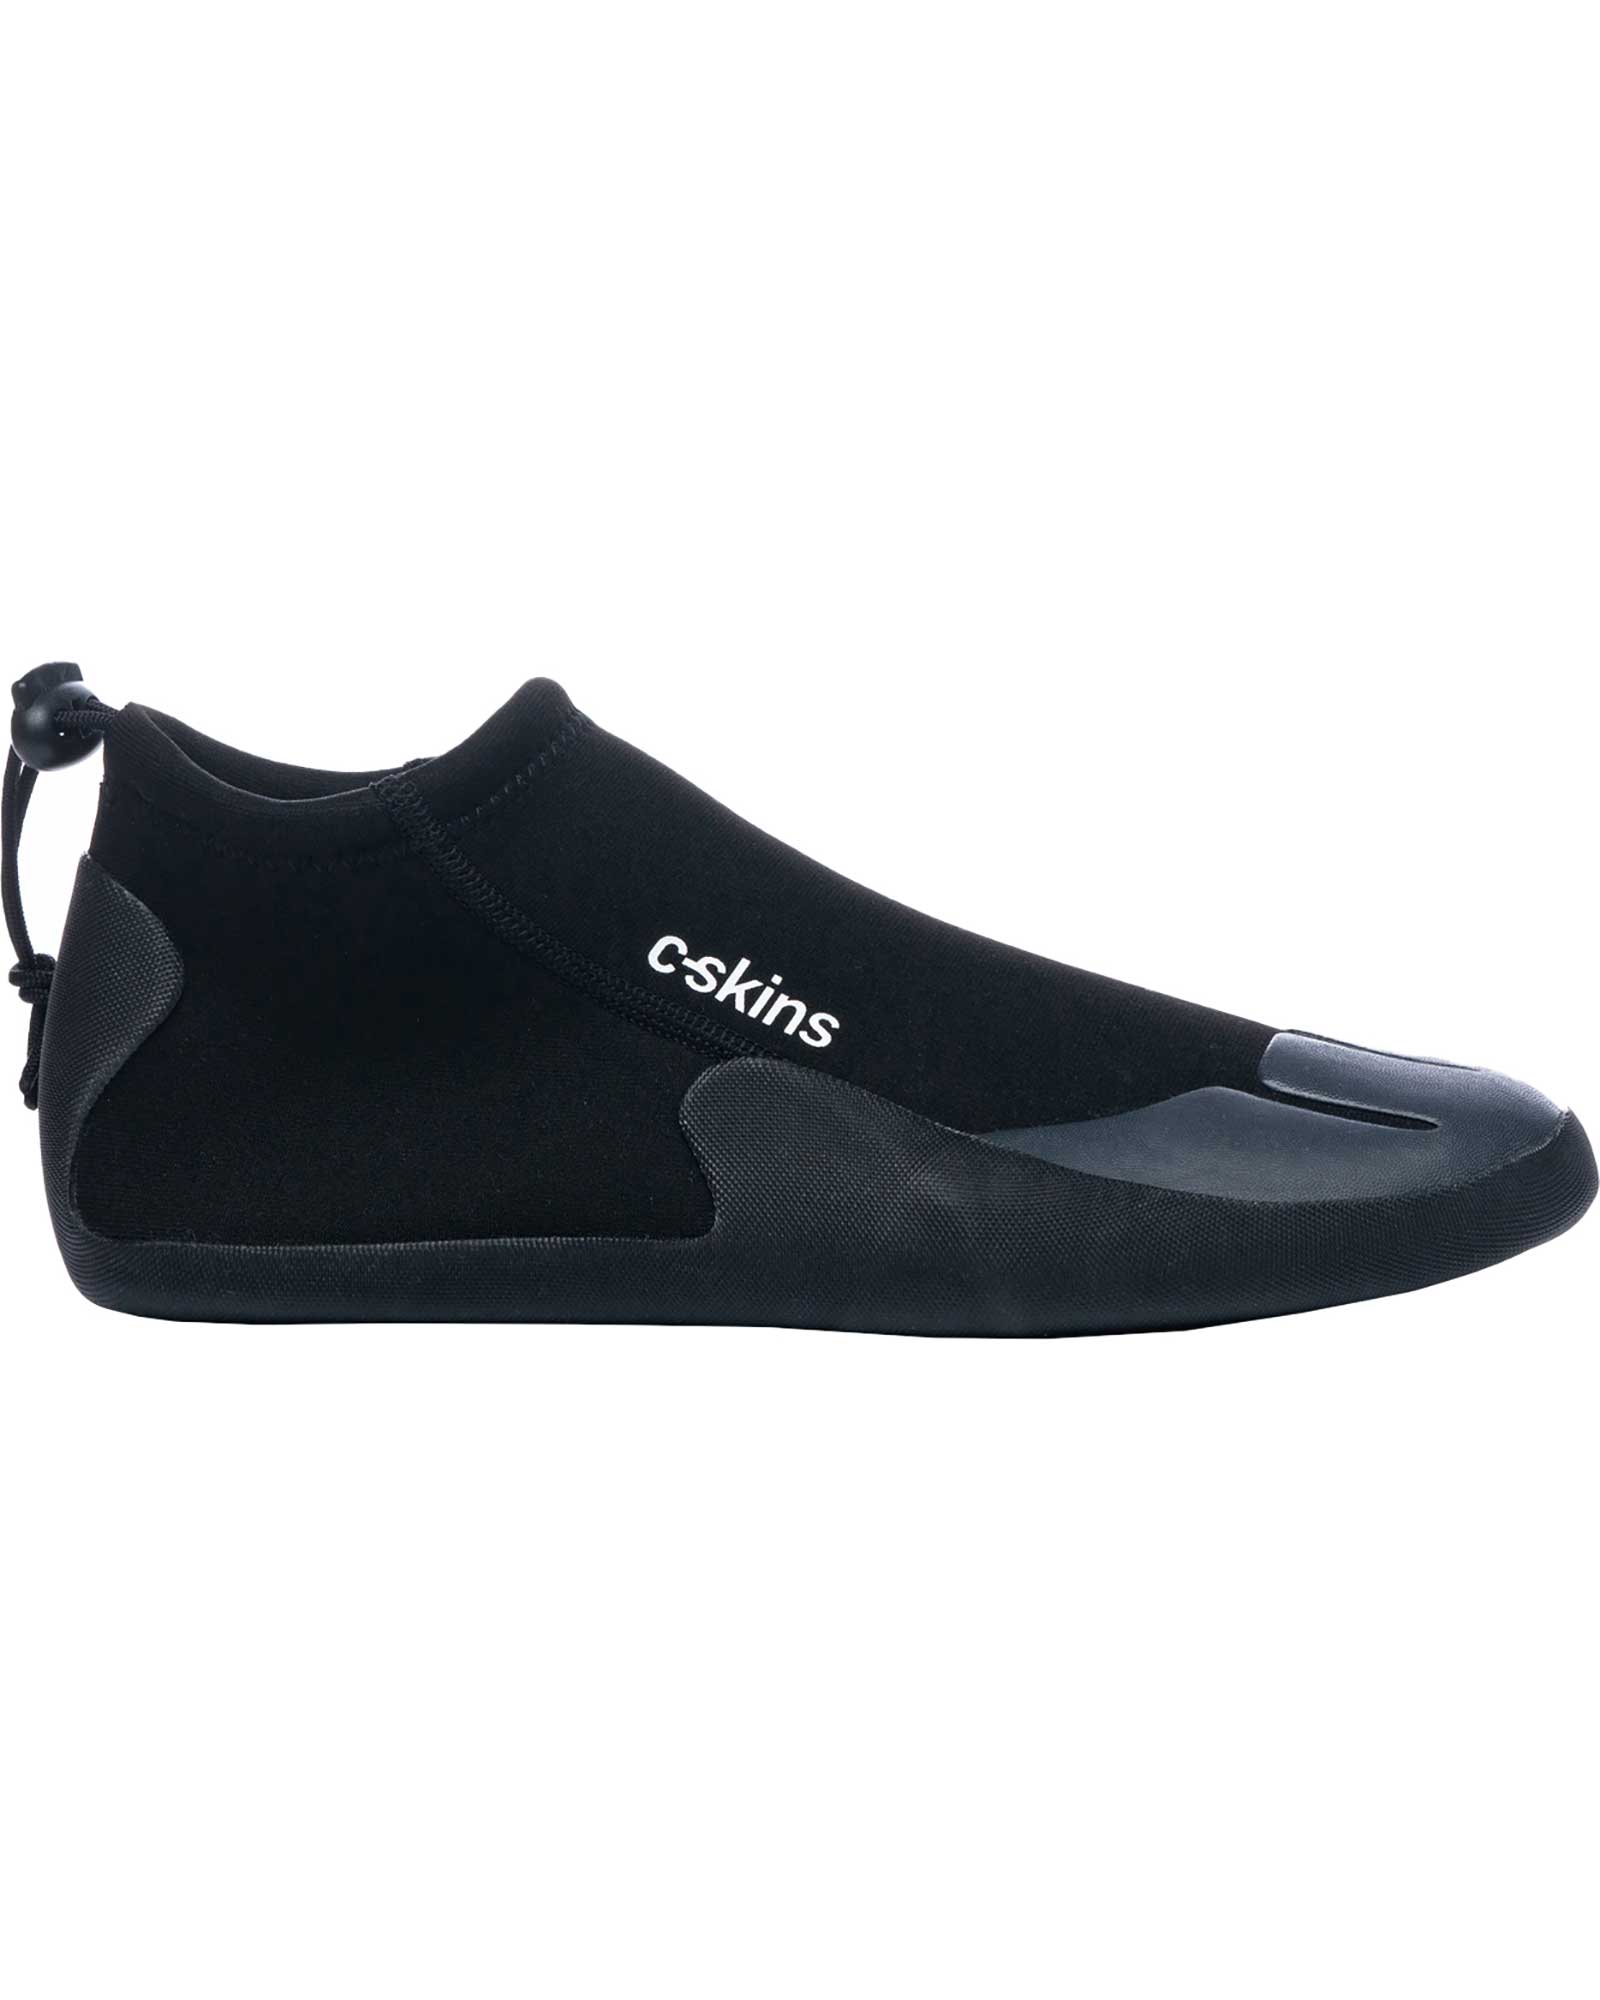 C Skins Legend 3mm Reef Boots - Black/Charcoal UK 6